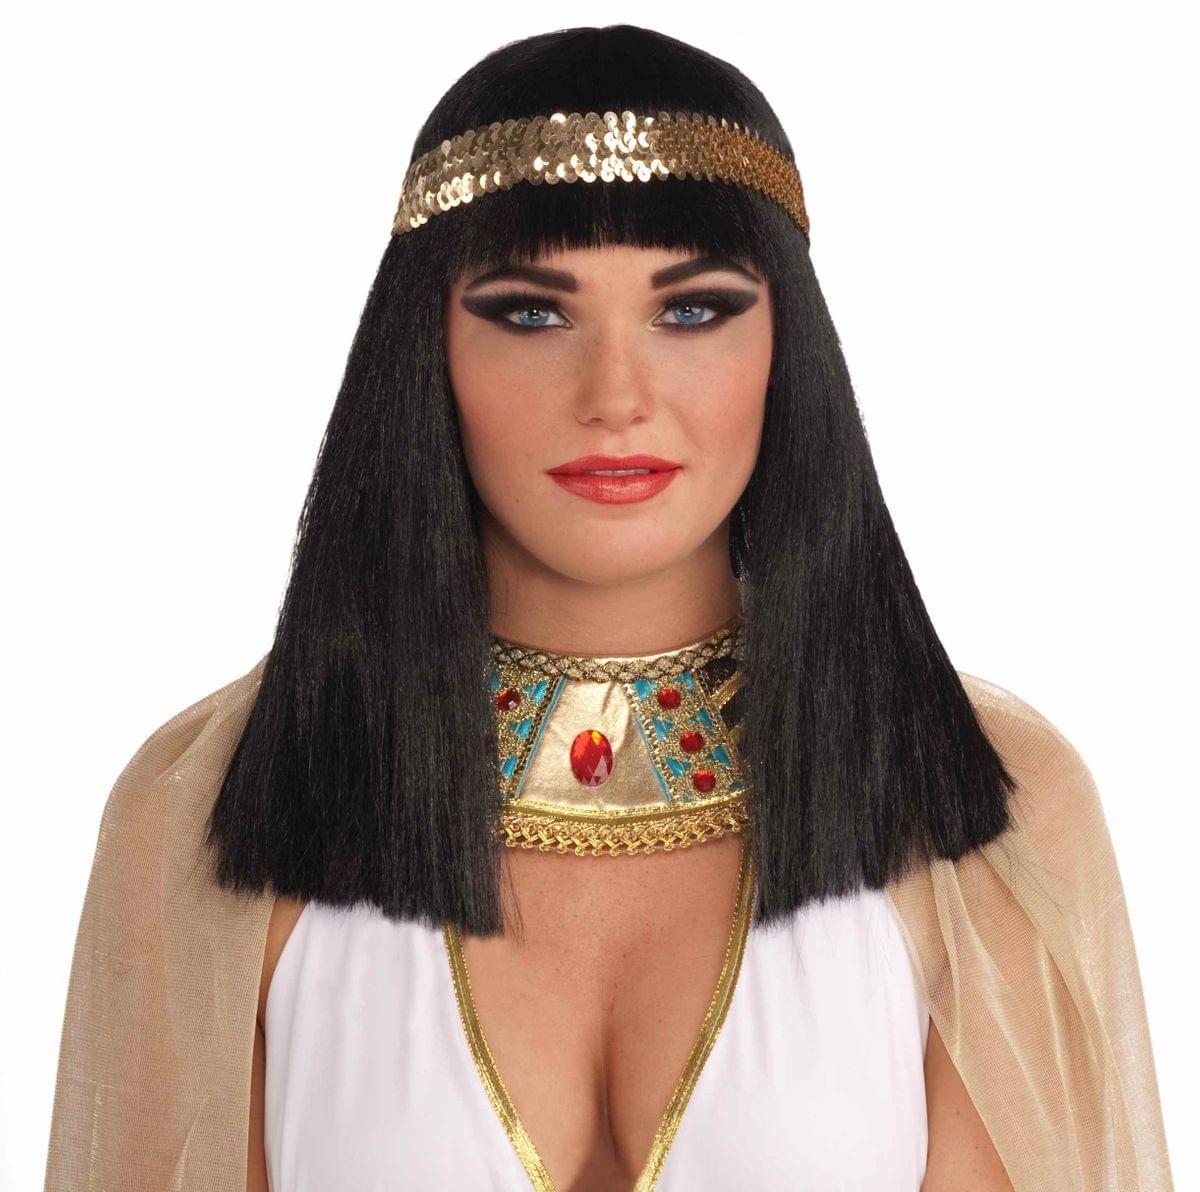 Black Cleopatra Adult Costume Wig With Headband